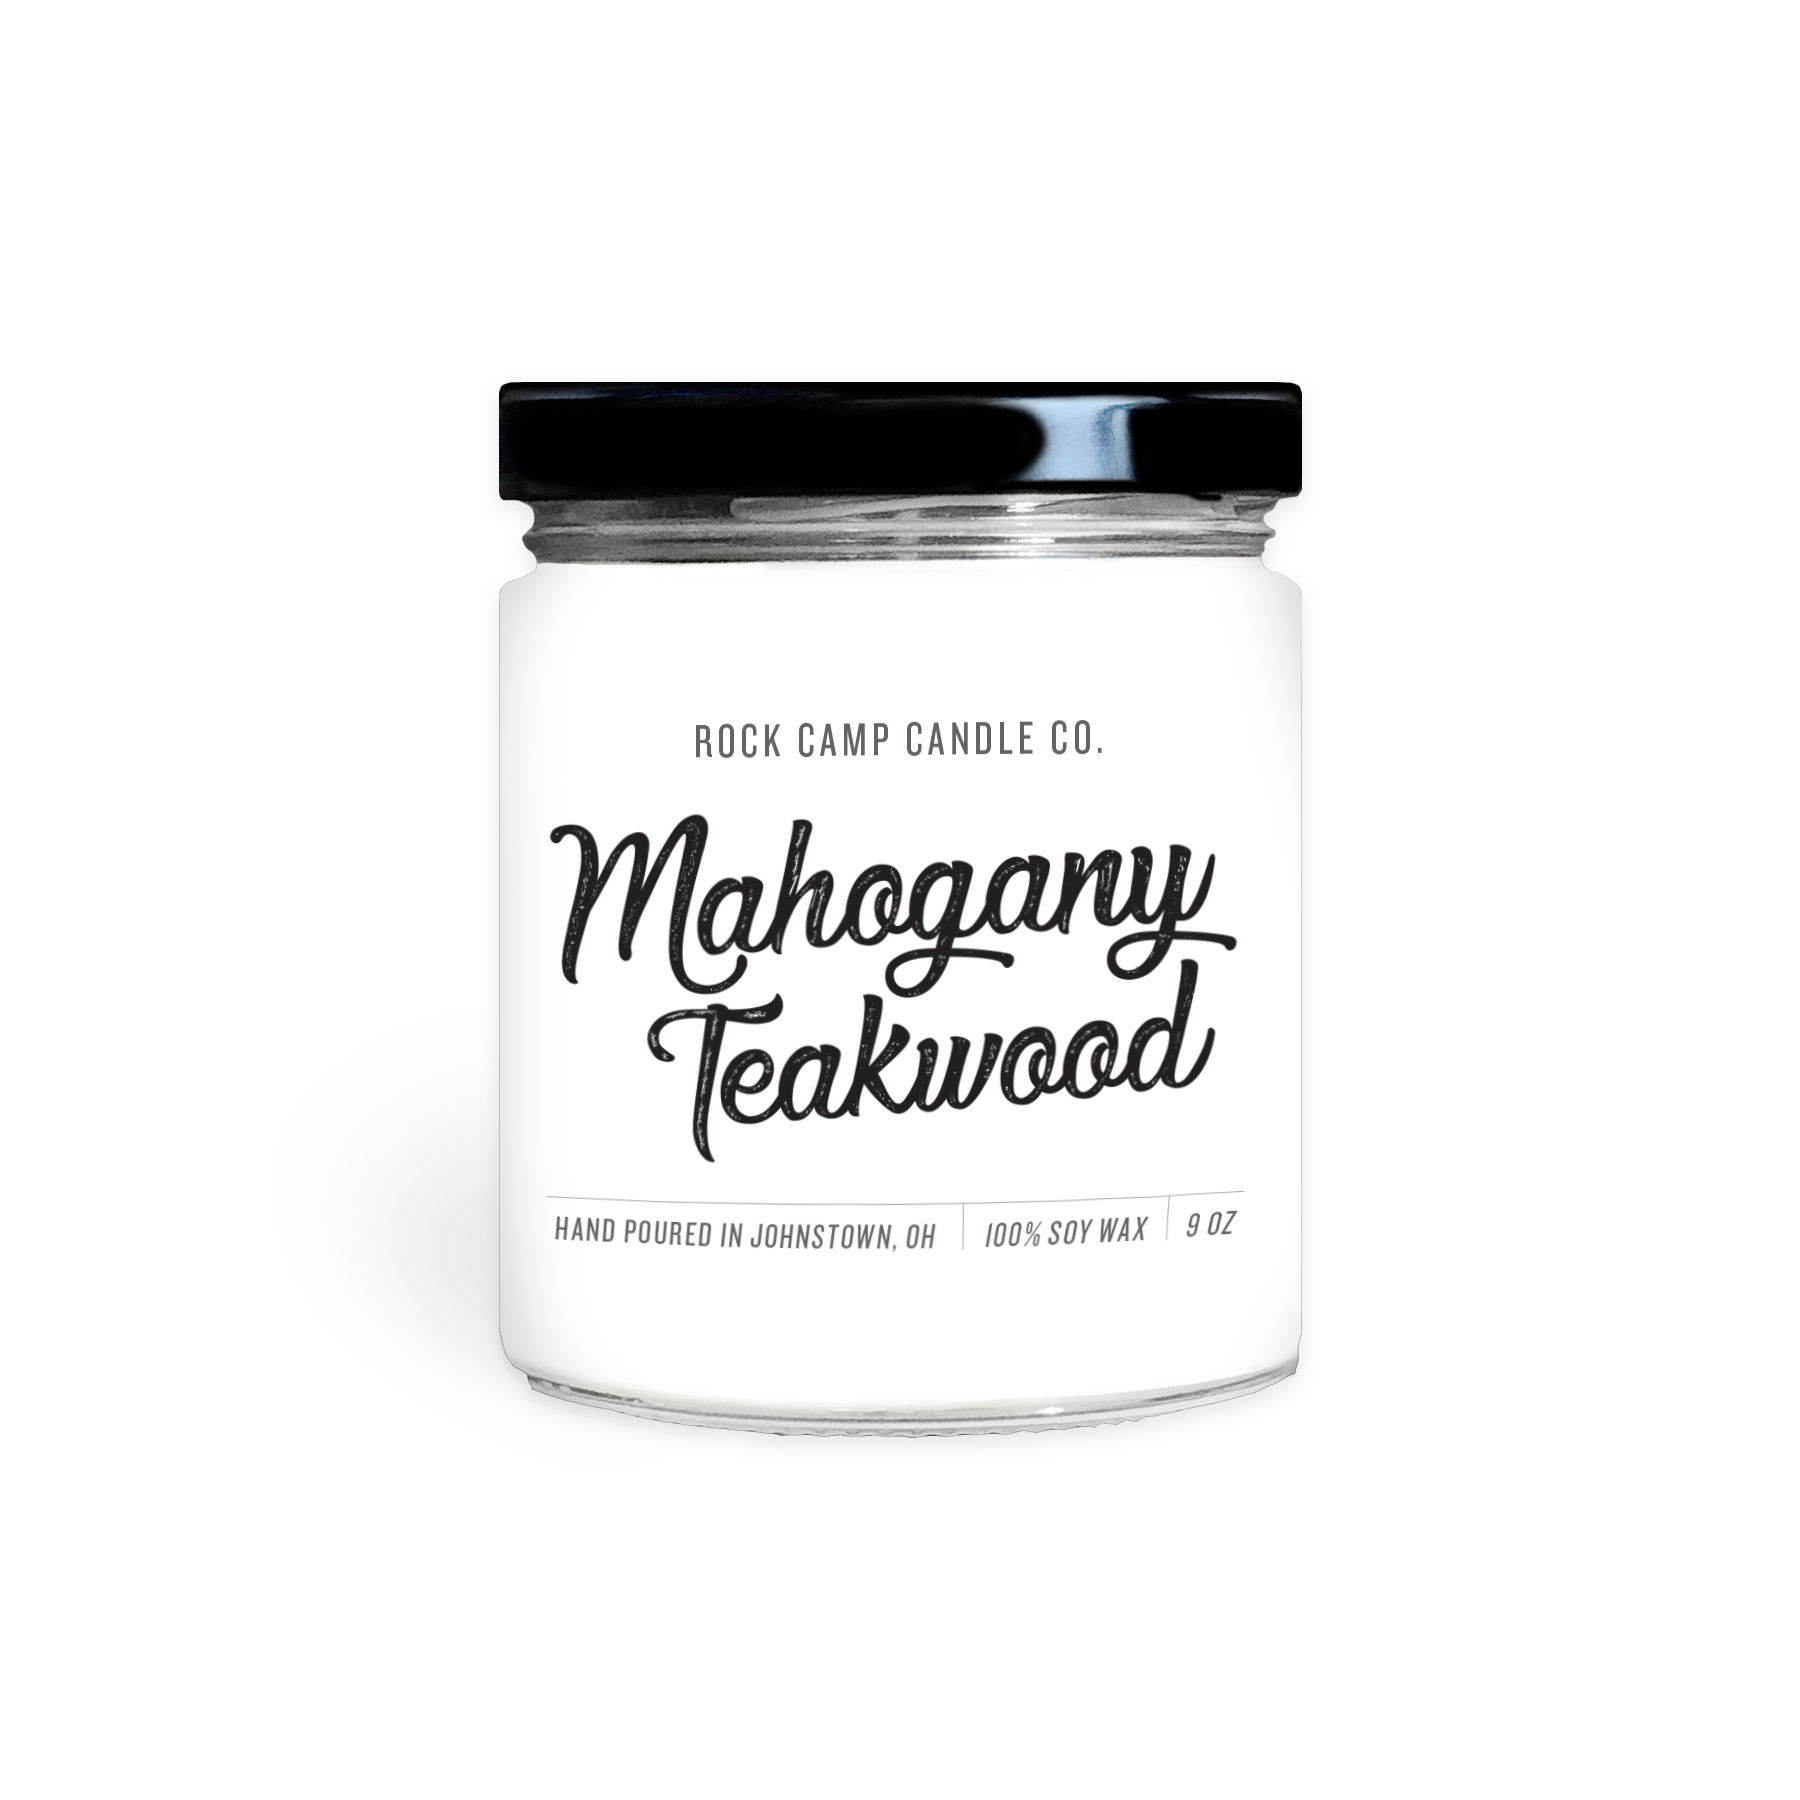 Mahogany Teakwood — Seaux Mississippi Candle Co.